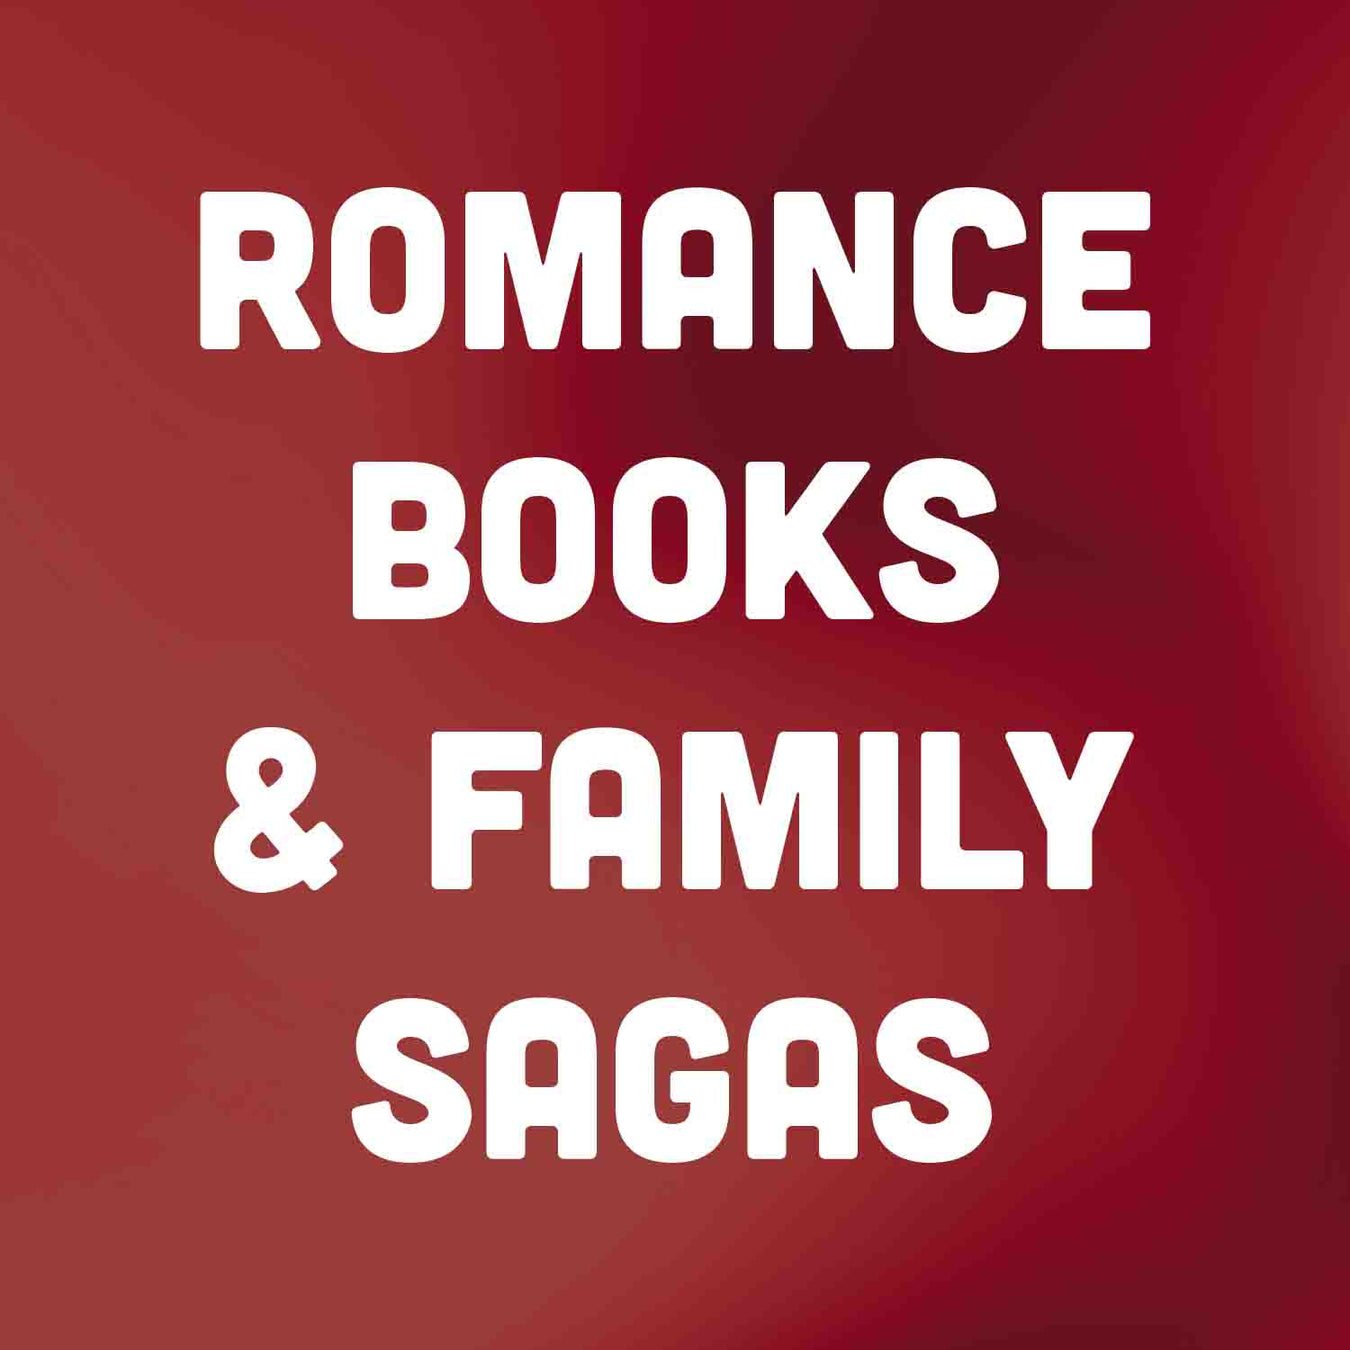 Romance Books & Family Sagas